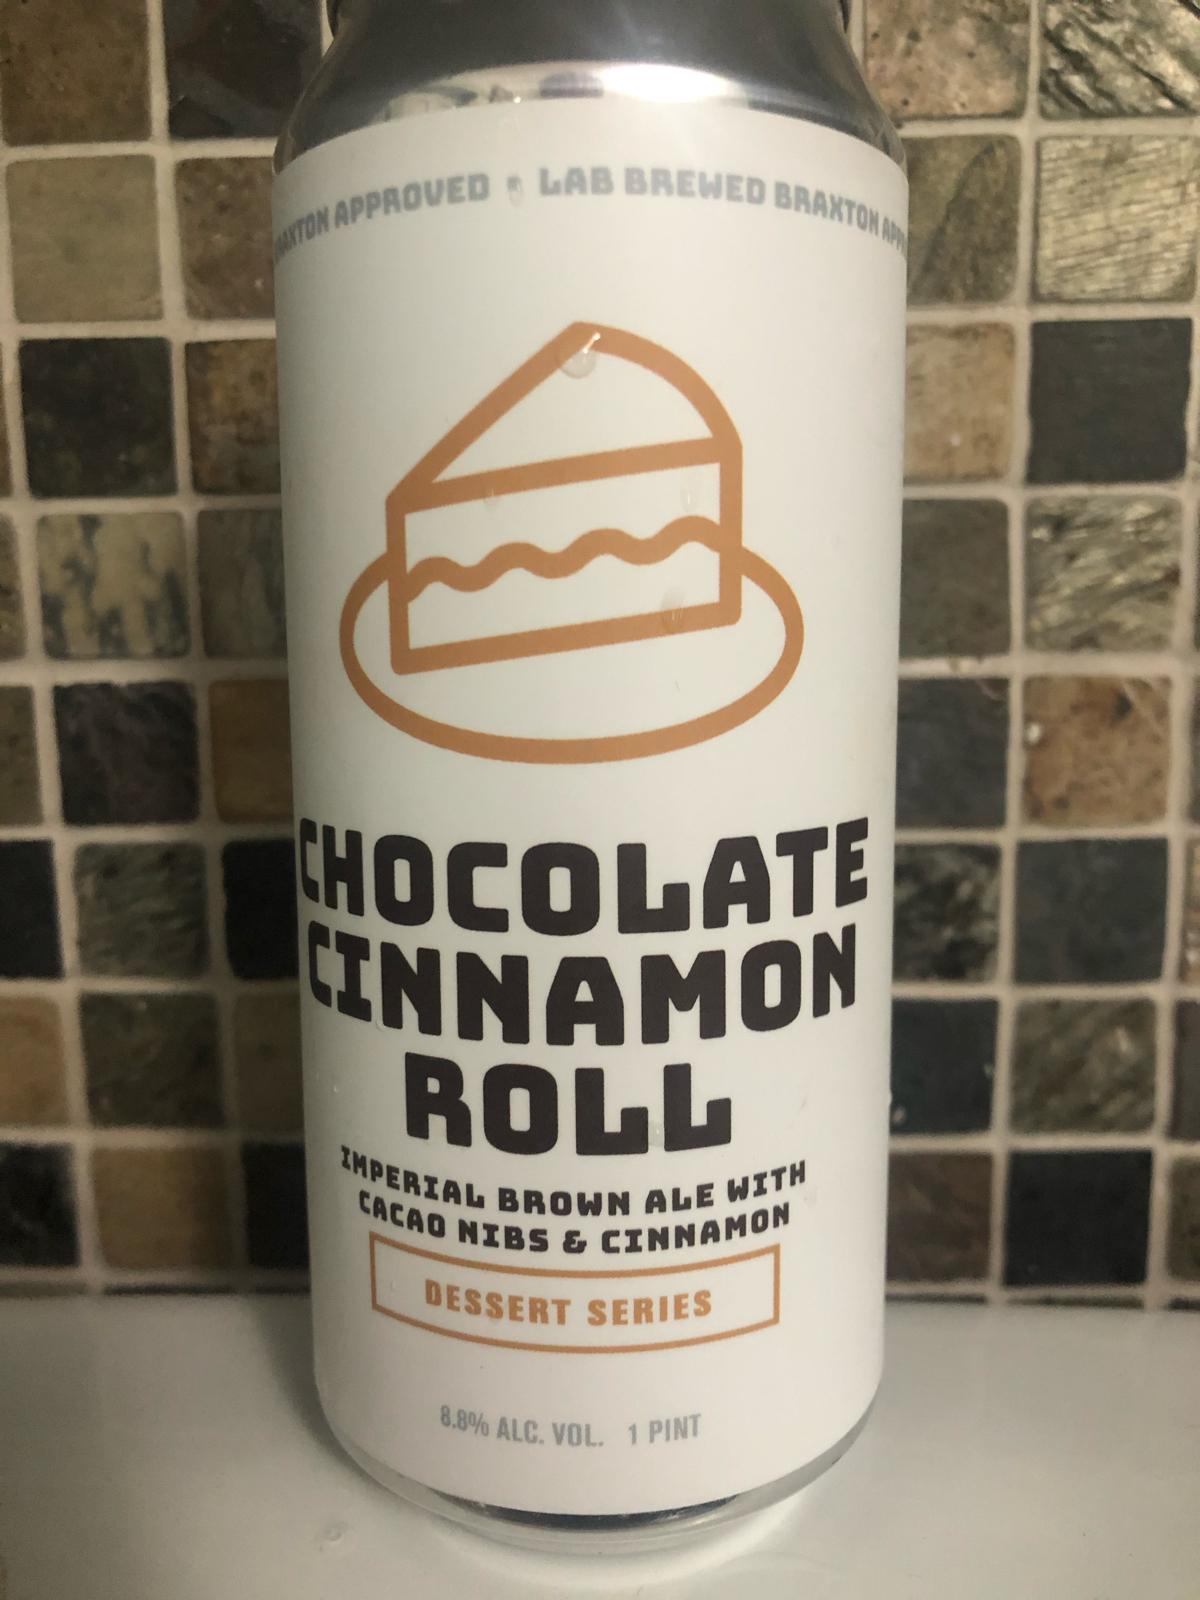 Braxton Labs Chocolate Cinnamon Roll